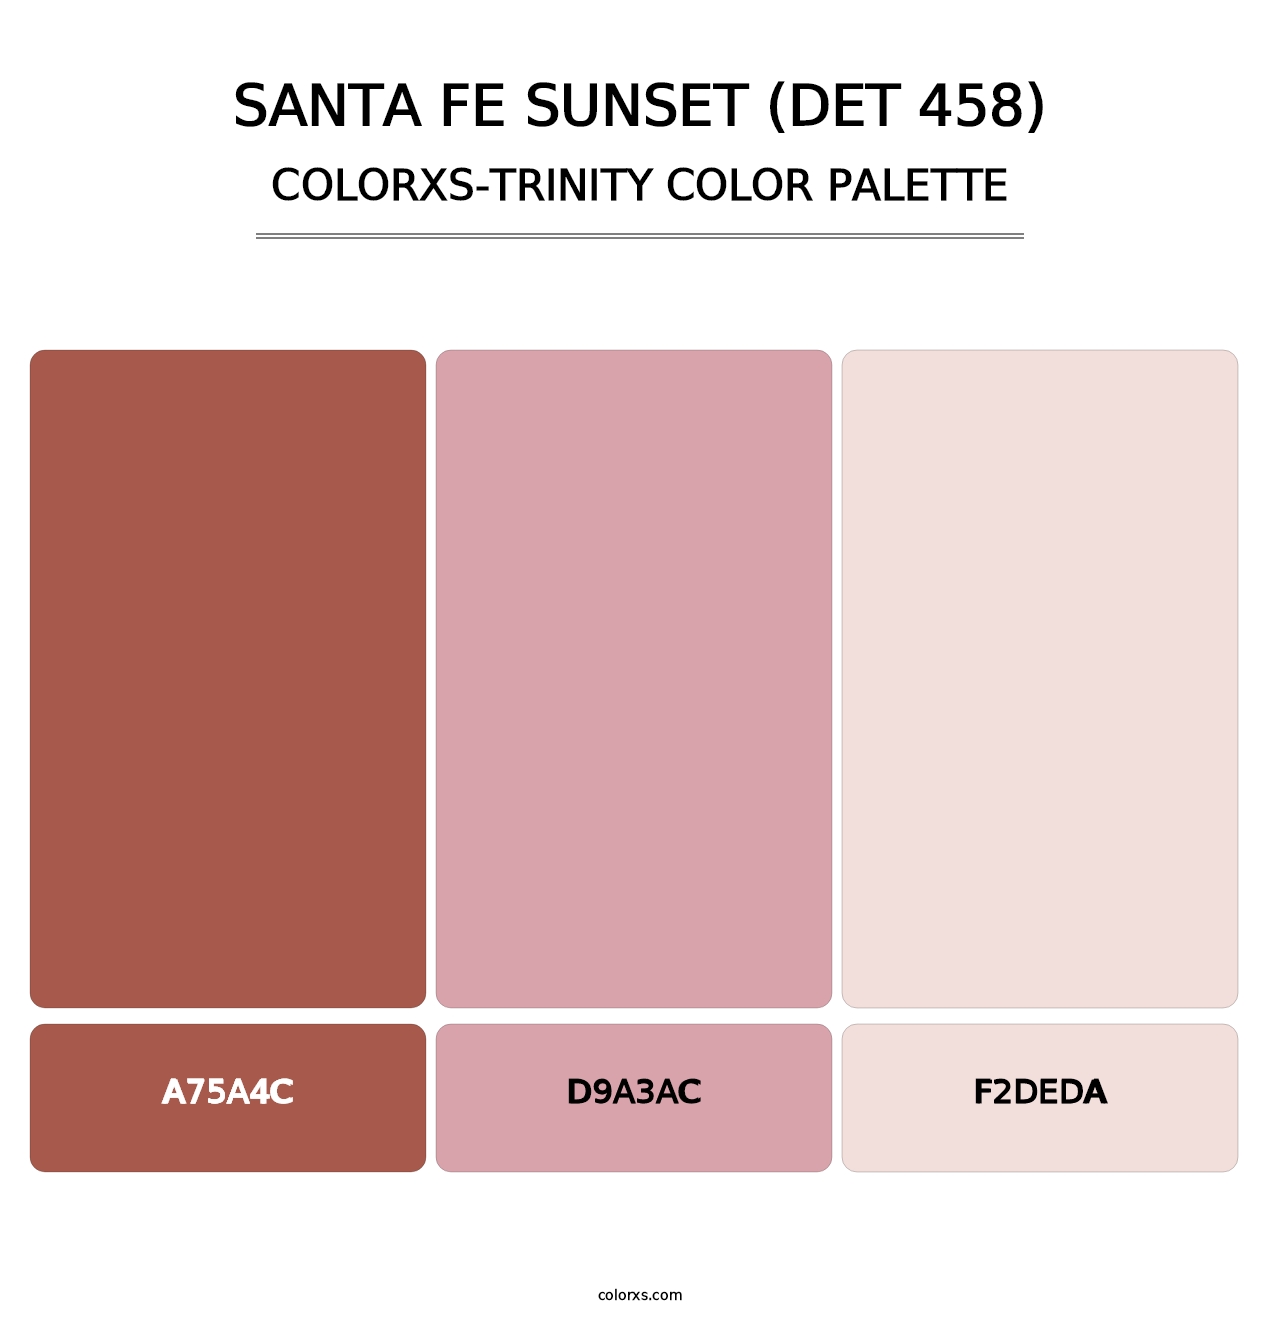 Santa Fe Sunset (DET 458) - Colorxs Trinity Palette